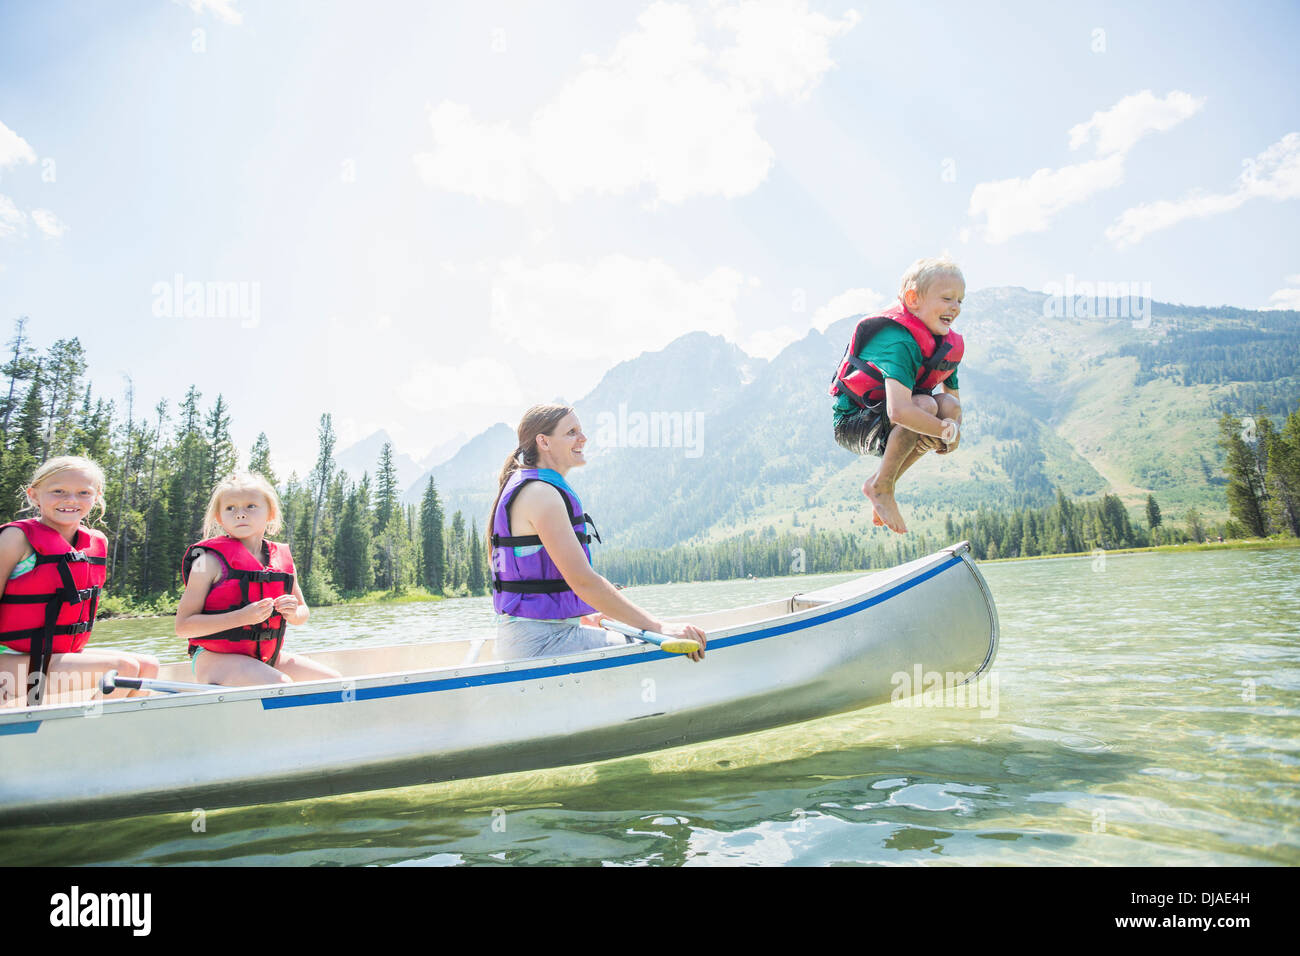 Caucasian boy jumping from canoe into lake Stock Photo